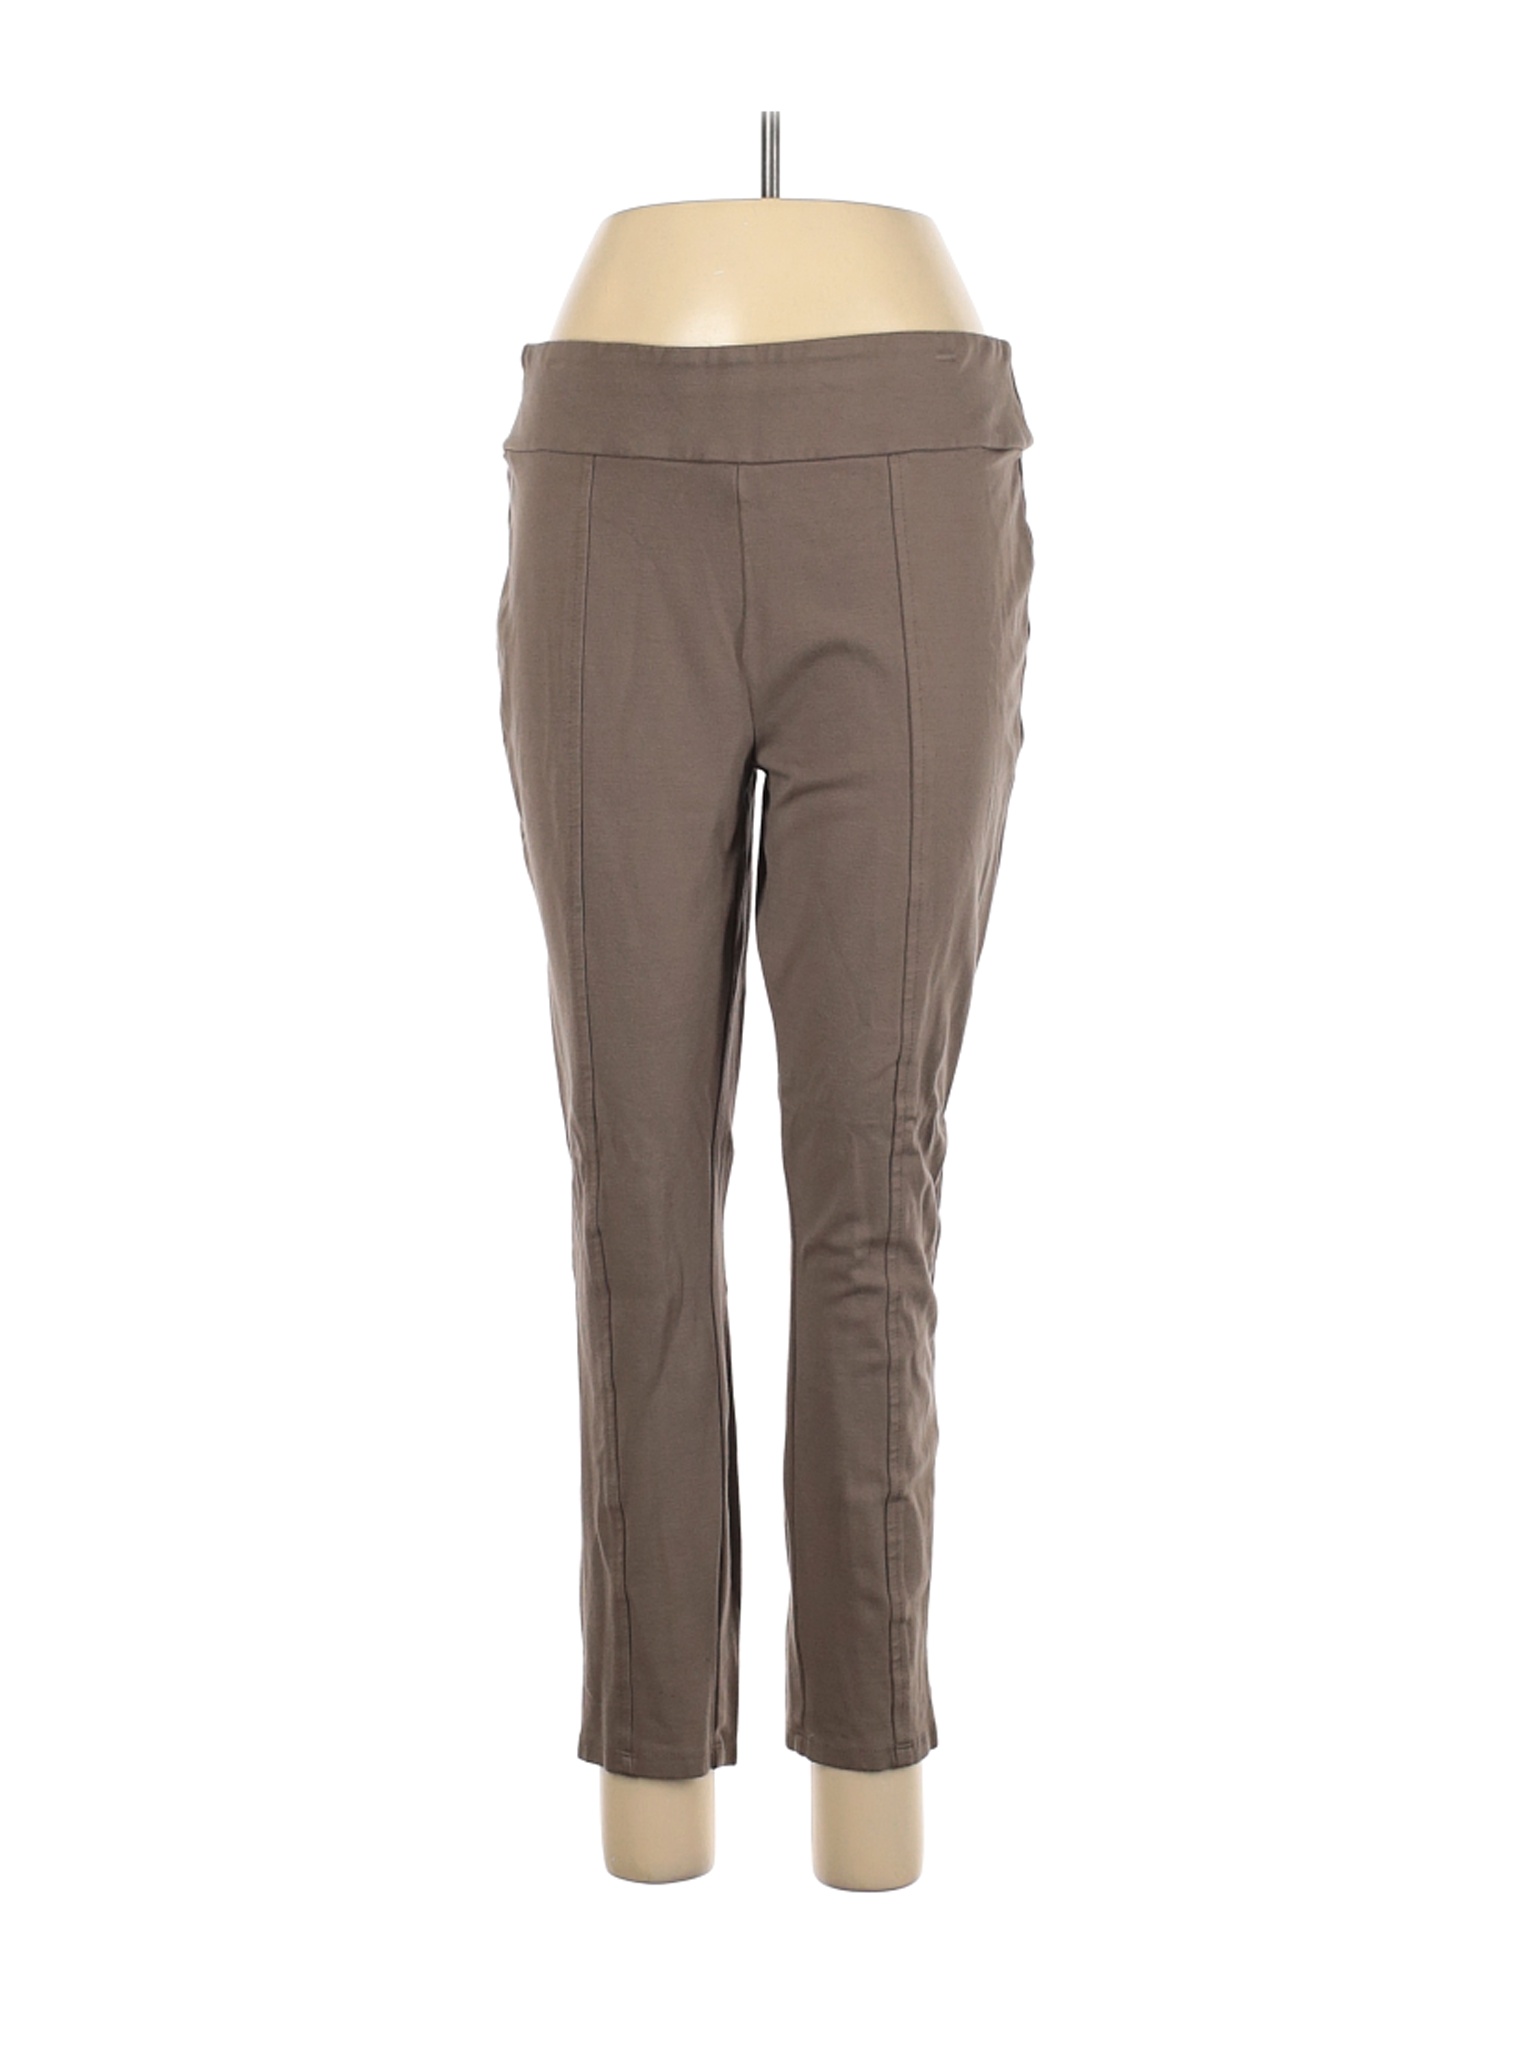 Jules & Leopold Women Brown Casual Pants L | eBay